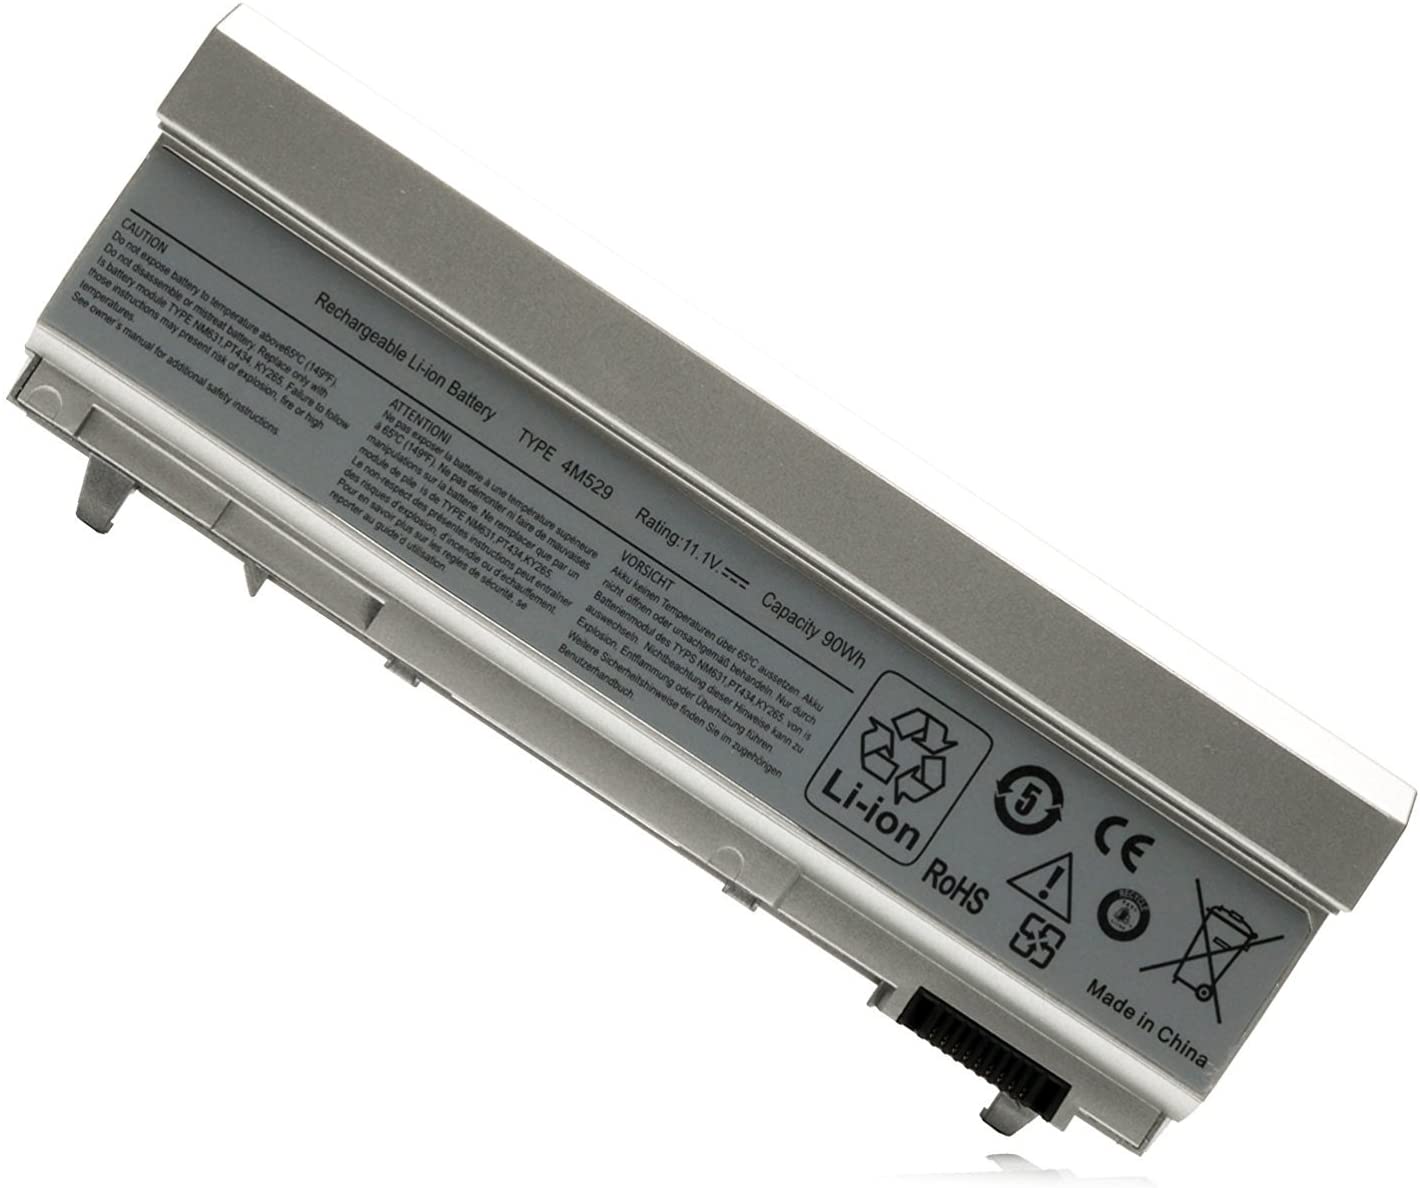 Replacement Laptop Battery for Dell Latitude E6410/E6410 ATG/E6510 Laptops/Precision mobile M4500